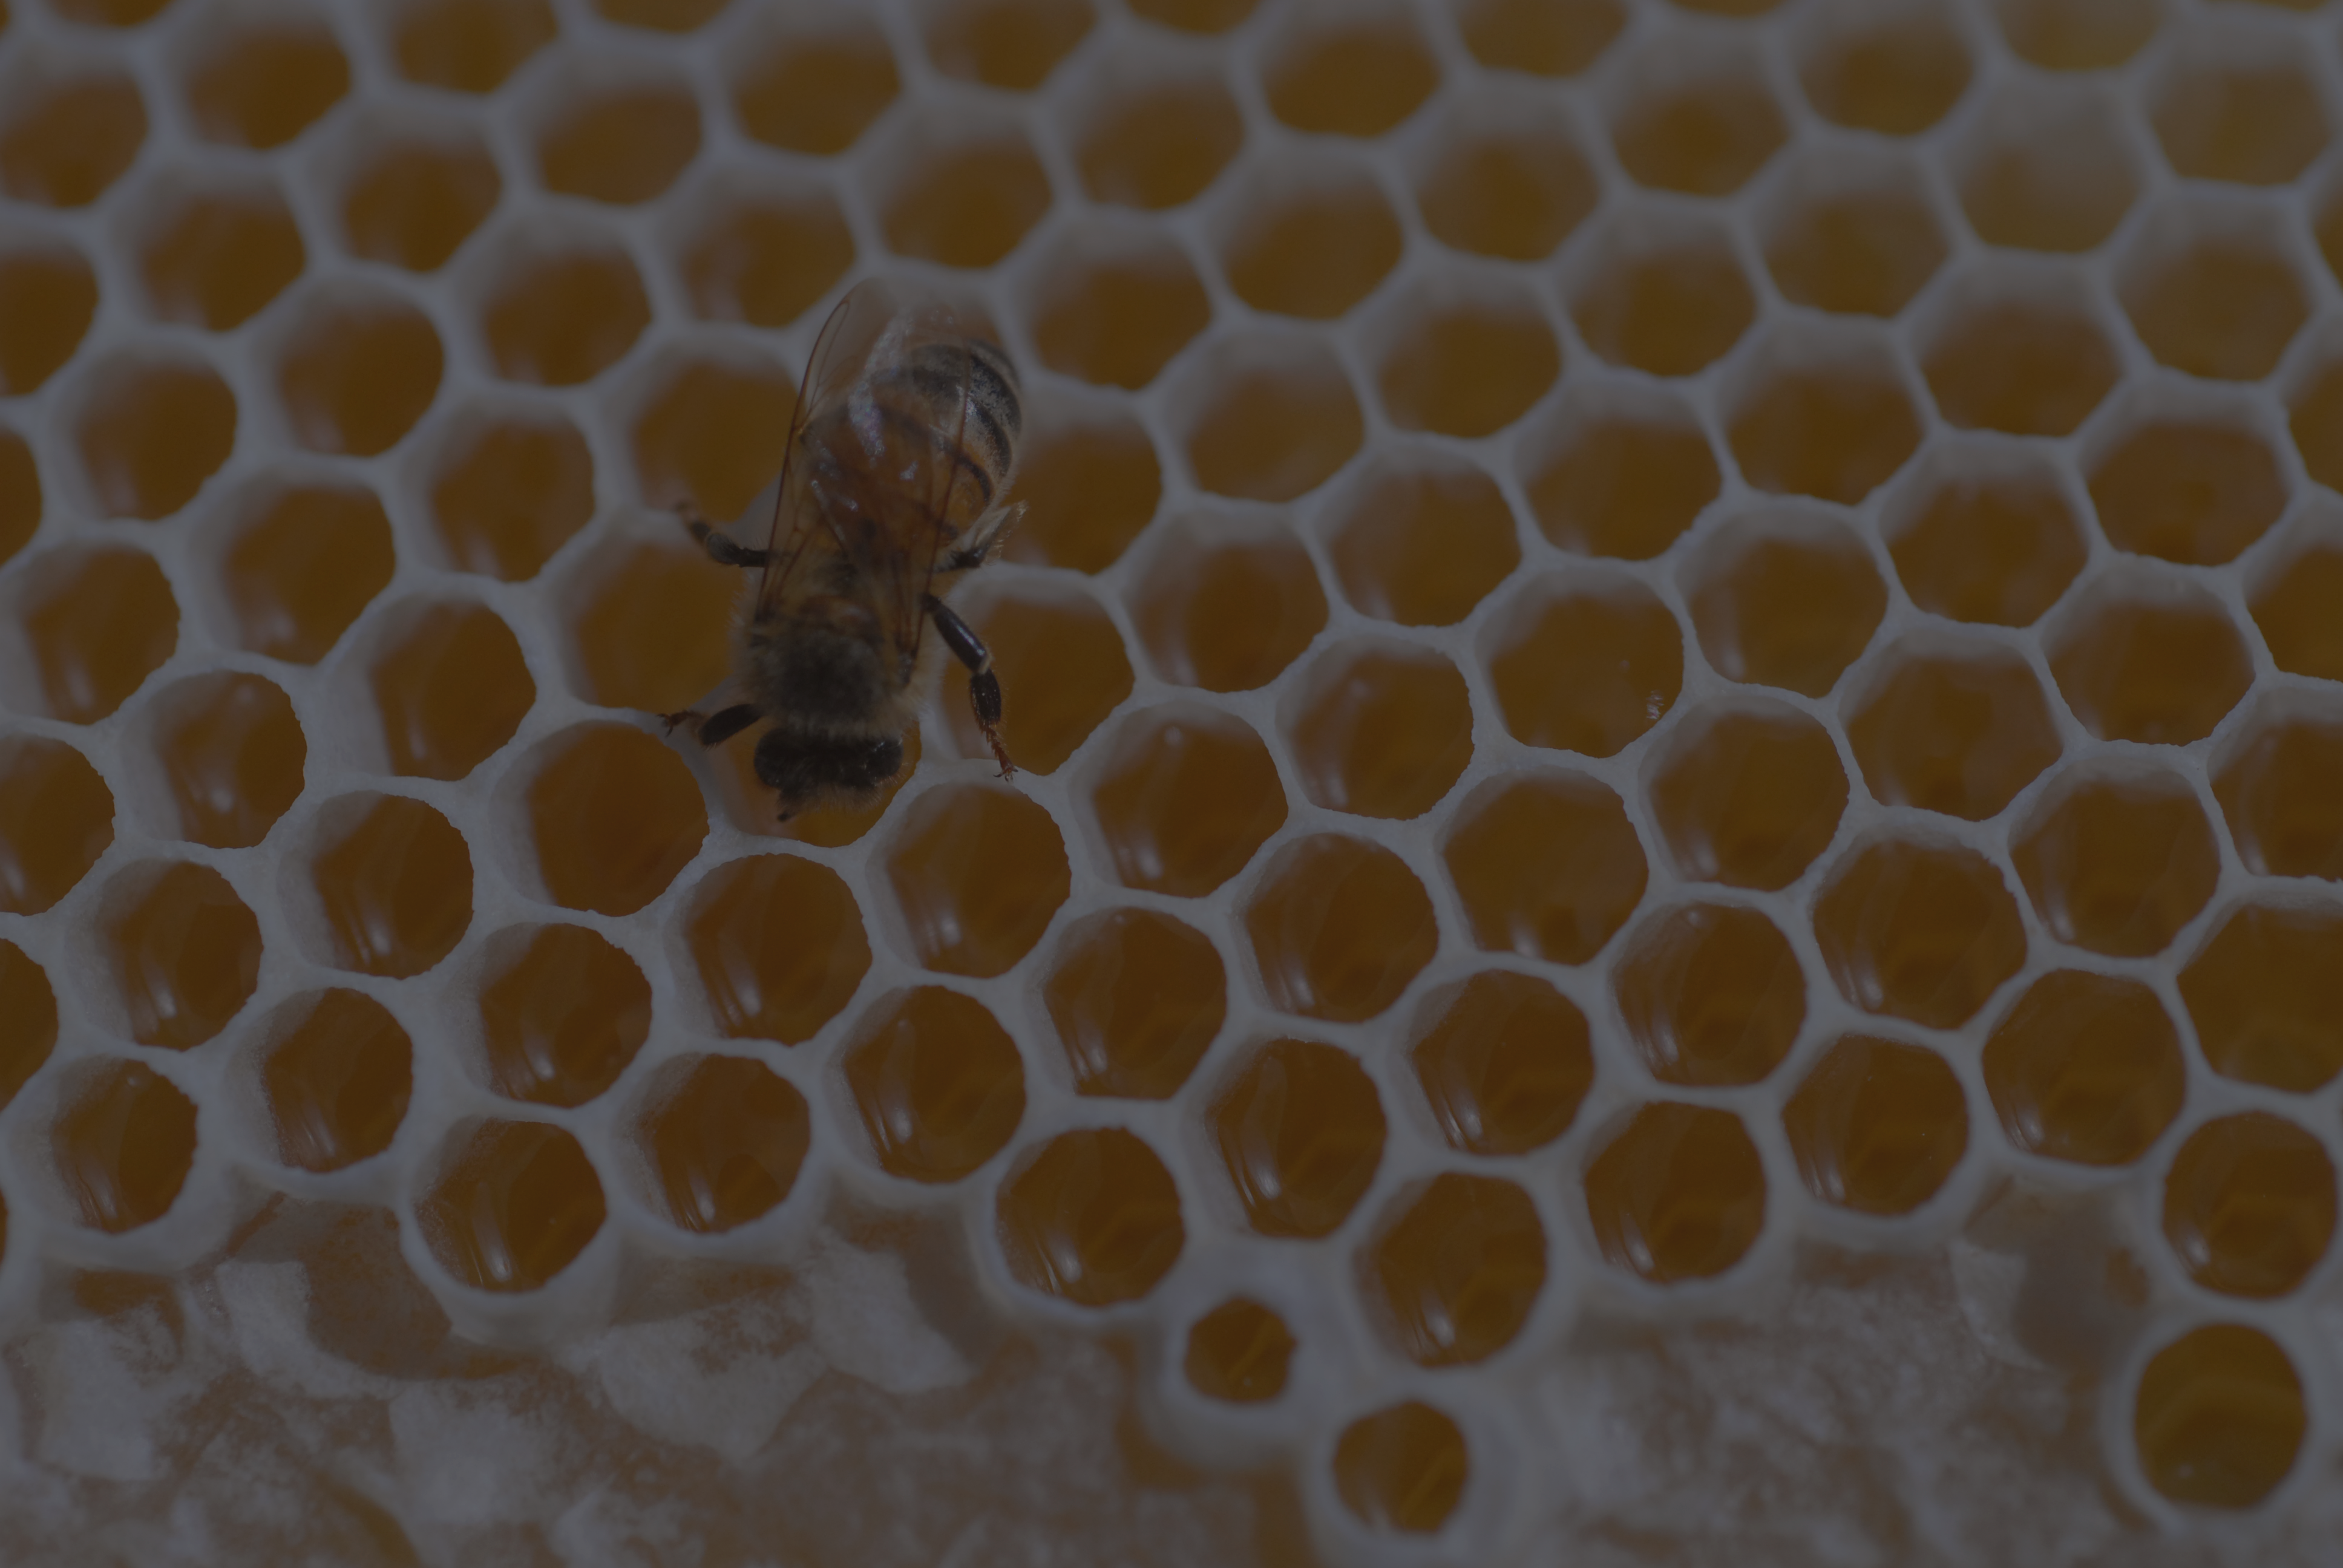 a single bee on honey comb